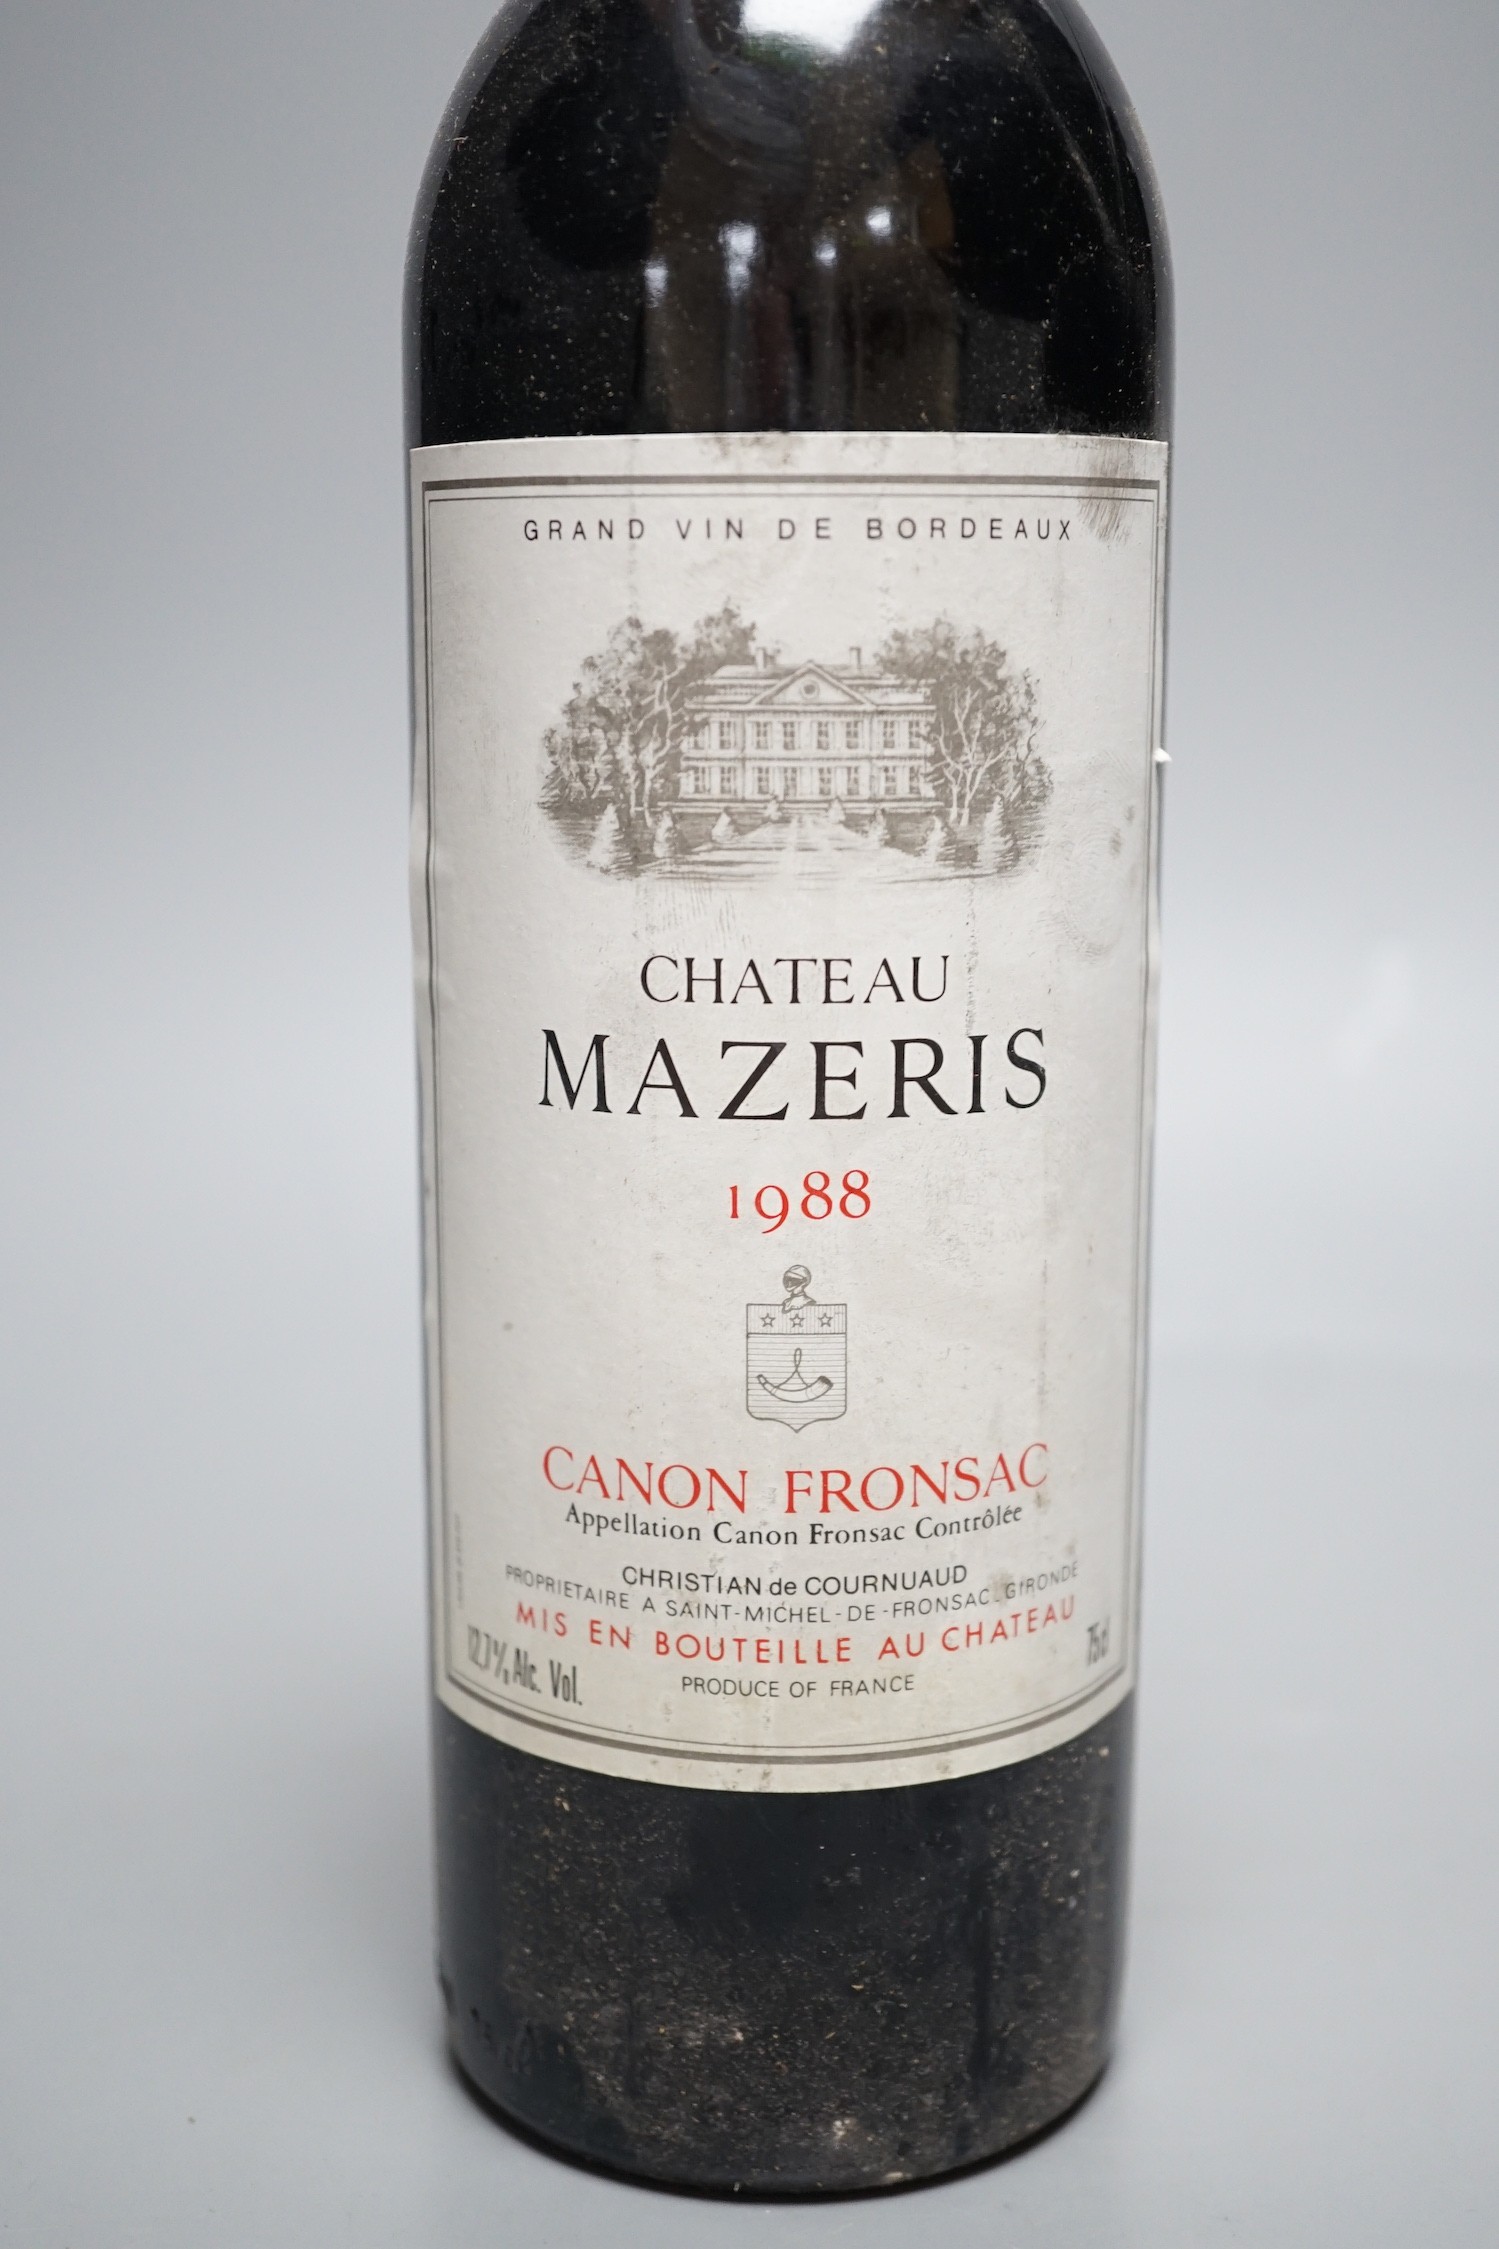 Five bottles of Chateau Mazeris Canon Fronsac 1988